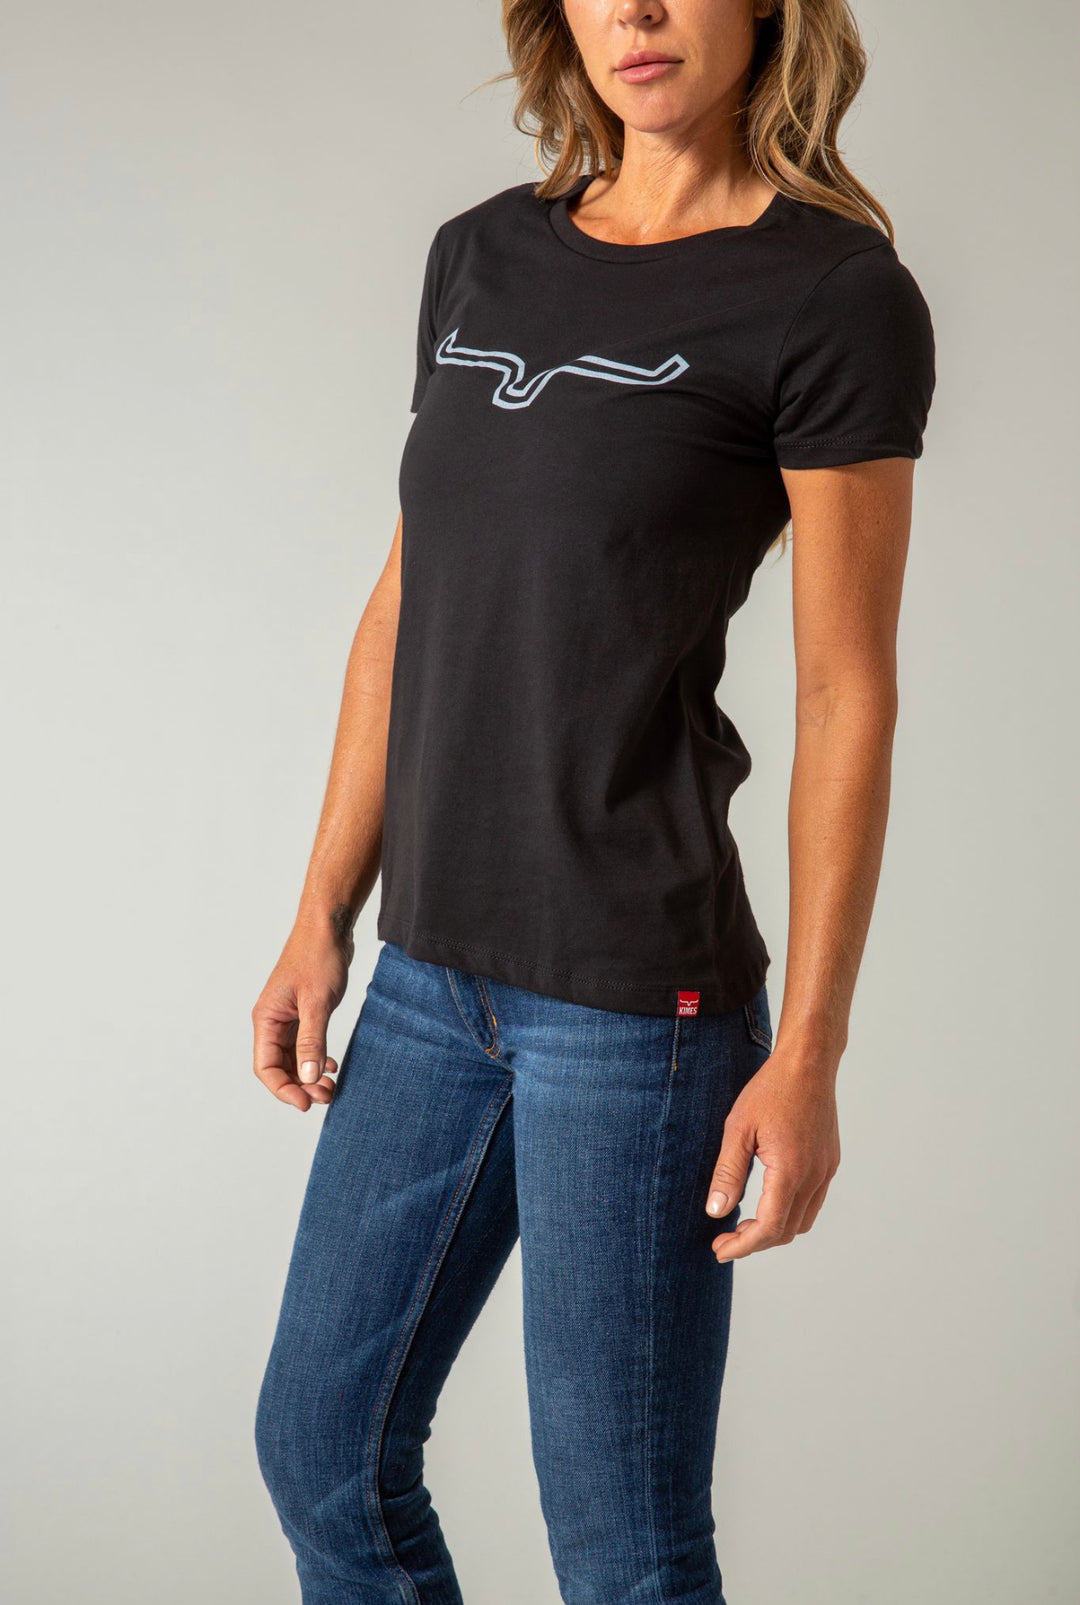 Kimes Ranch Ladies Outlier T-Shirt (Vintage Black)